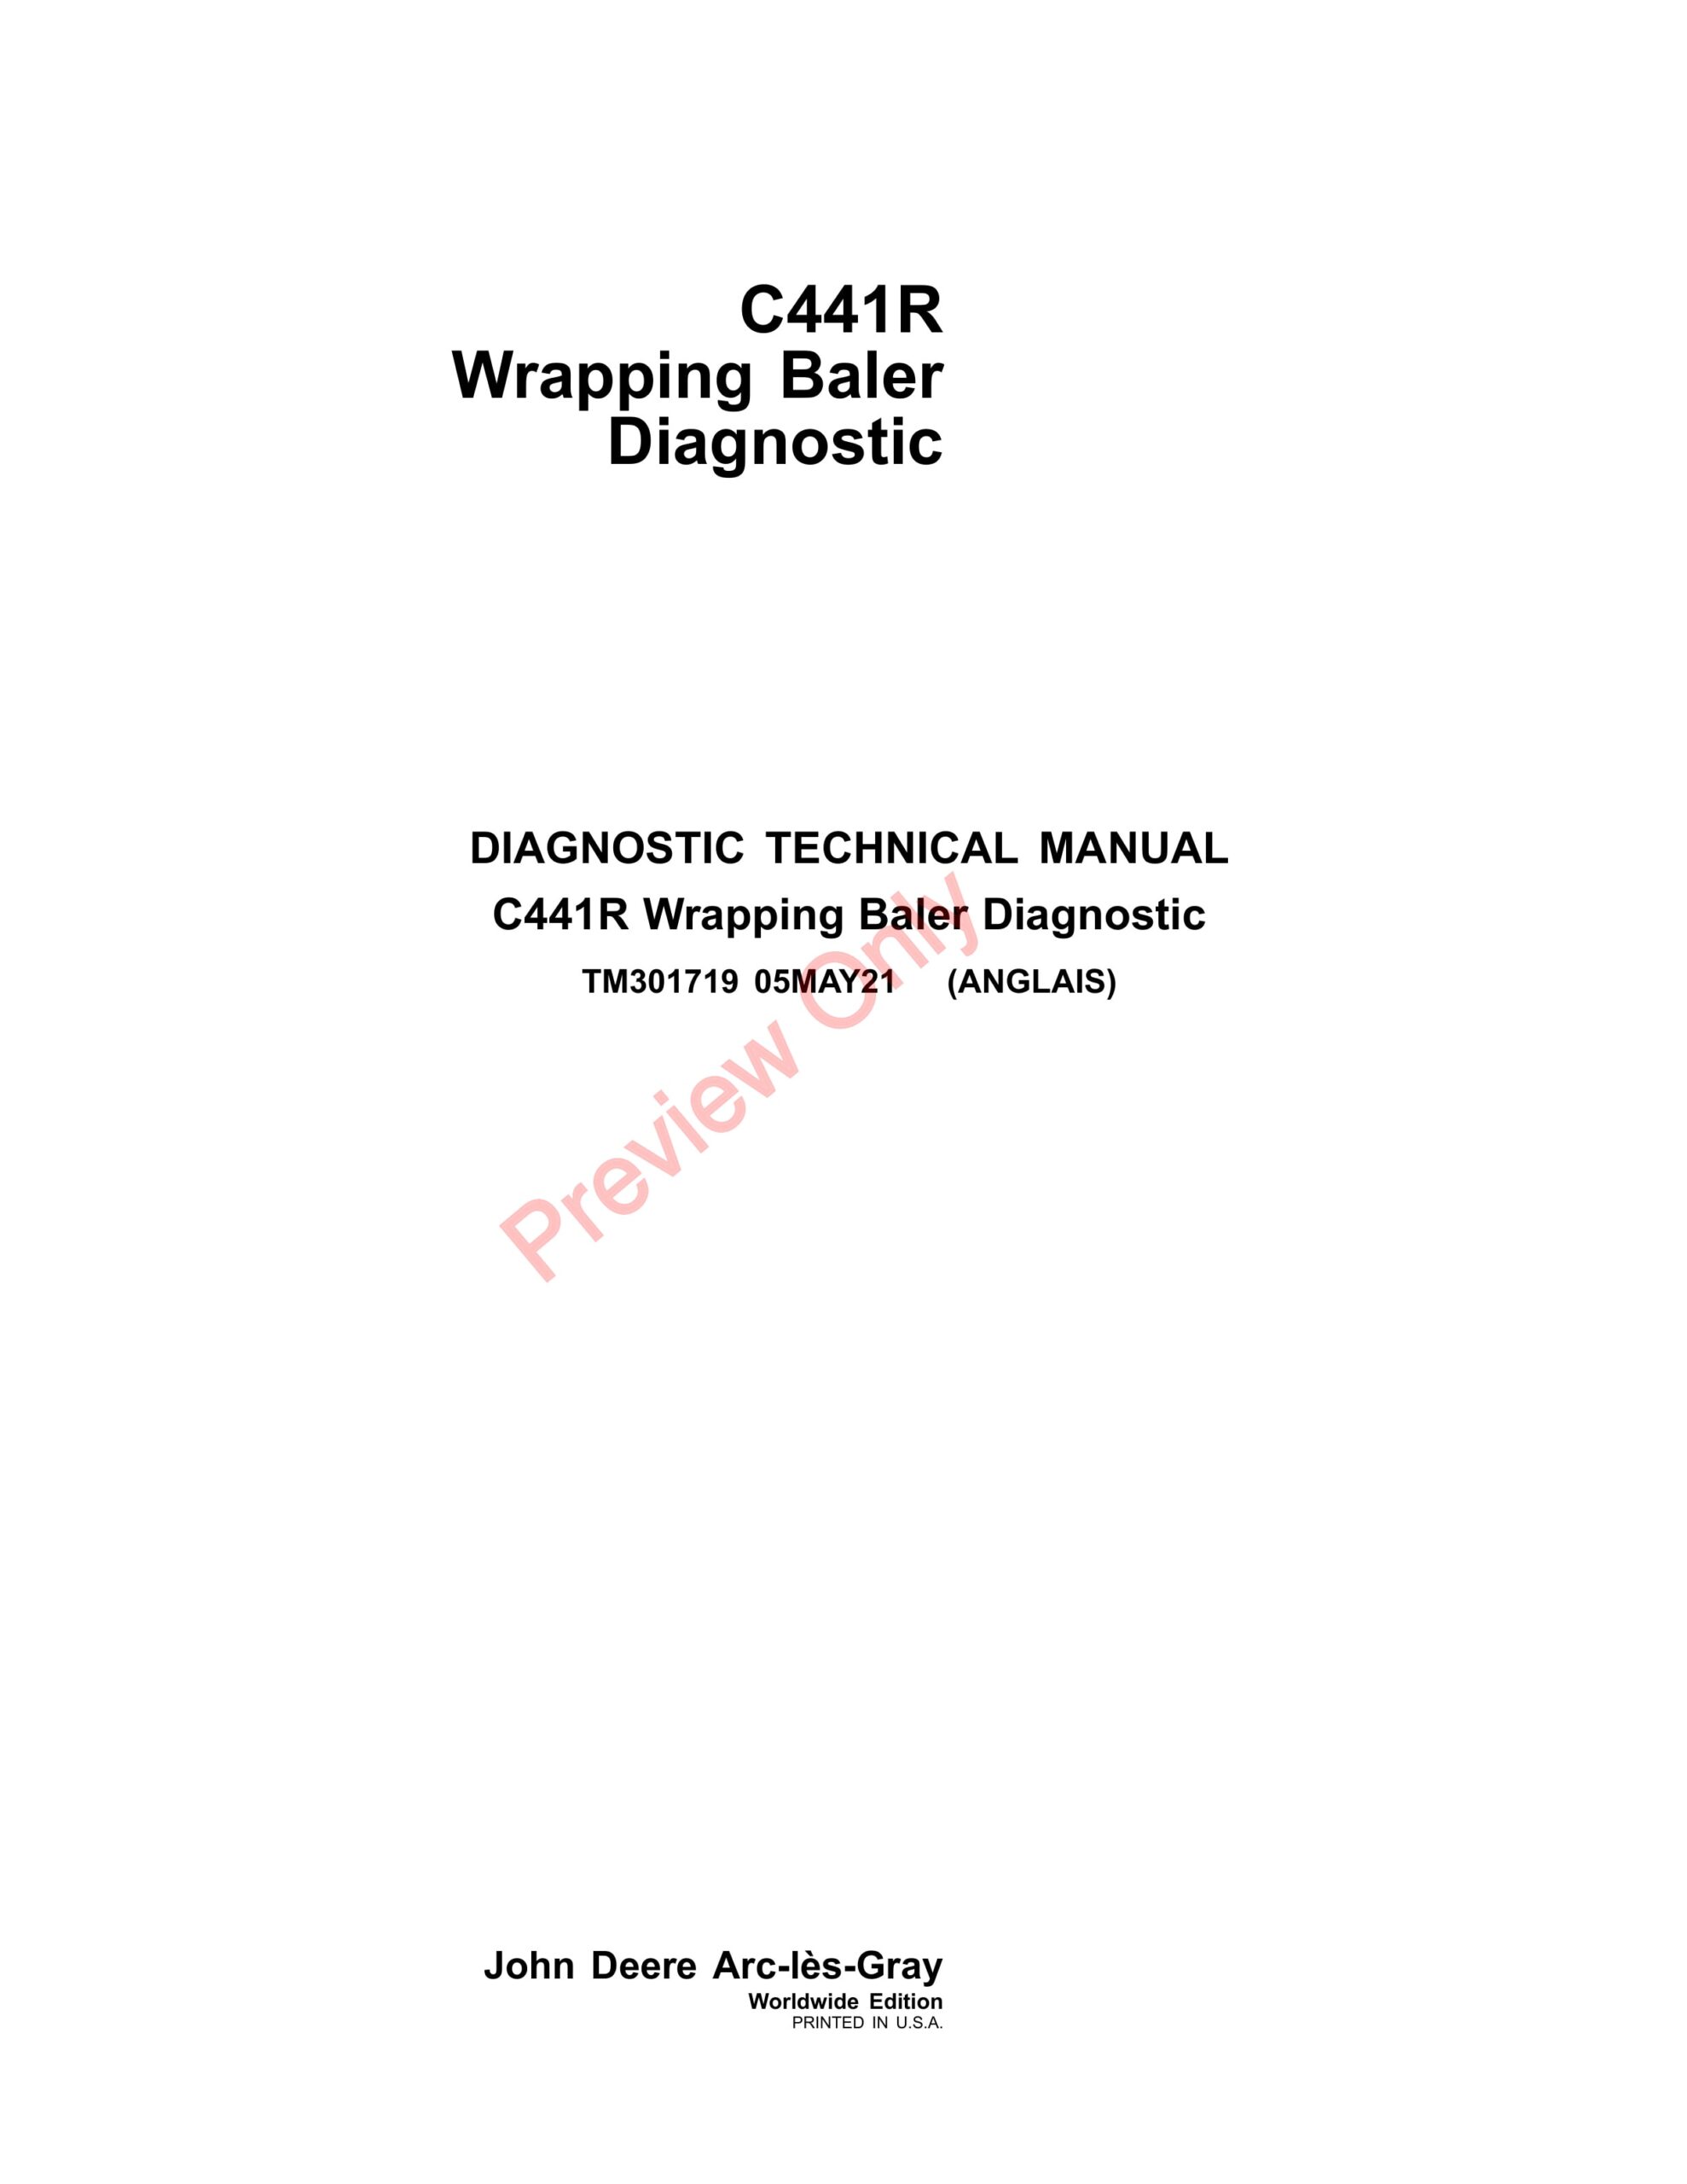 John Deere C441R Wrapping Baler Technical Manual TM301719 05MAY21-1